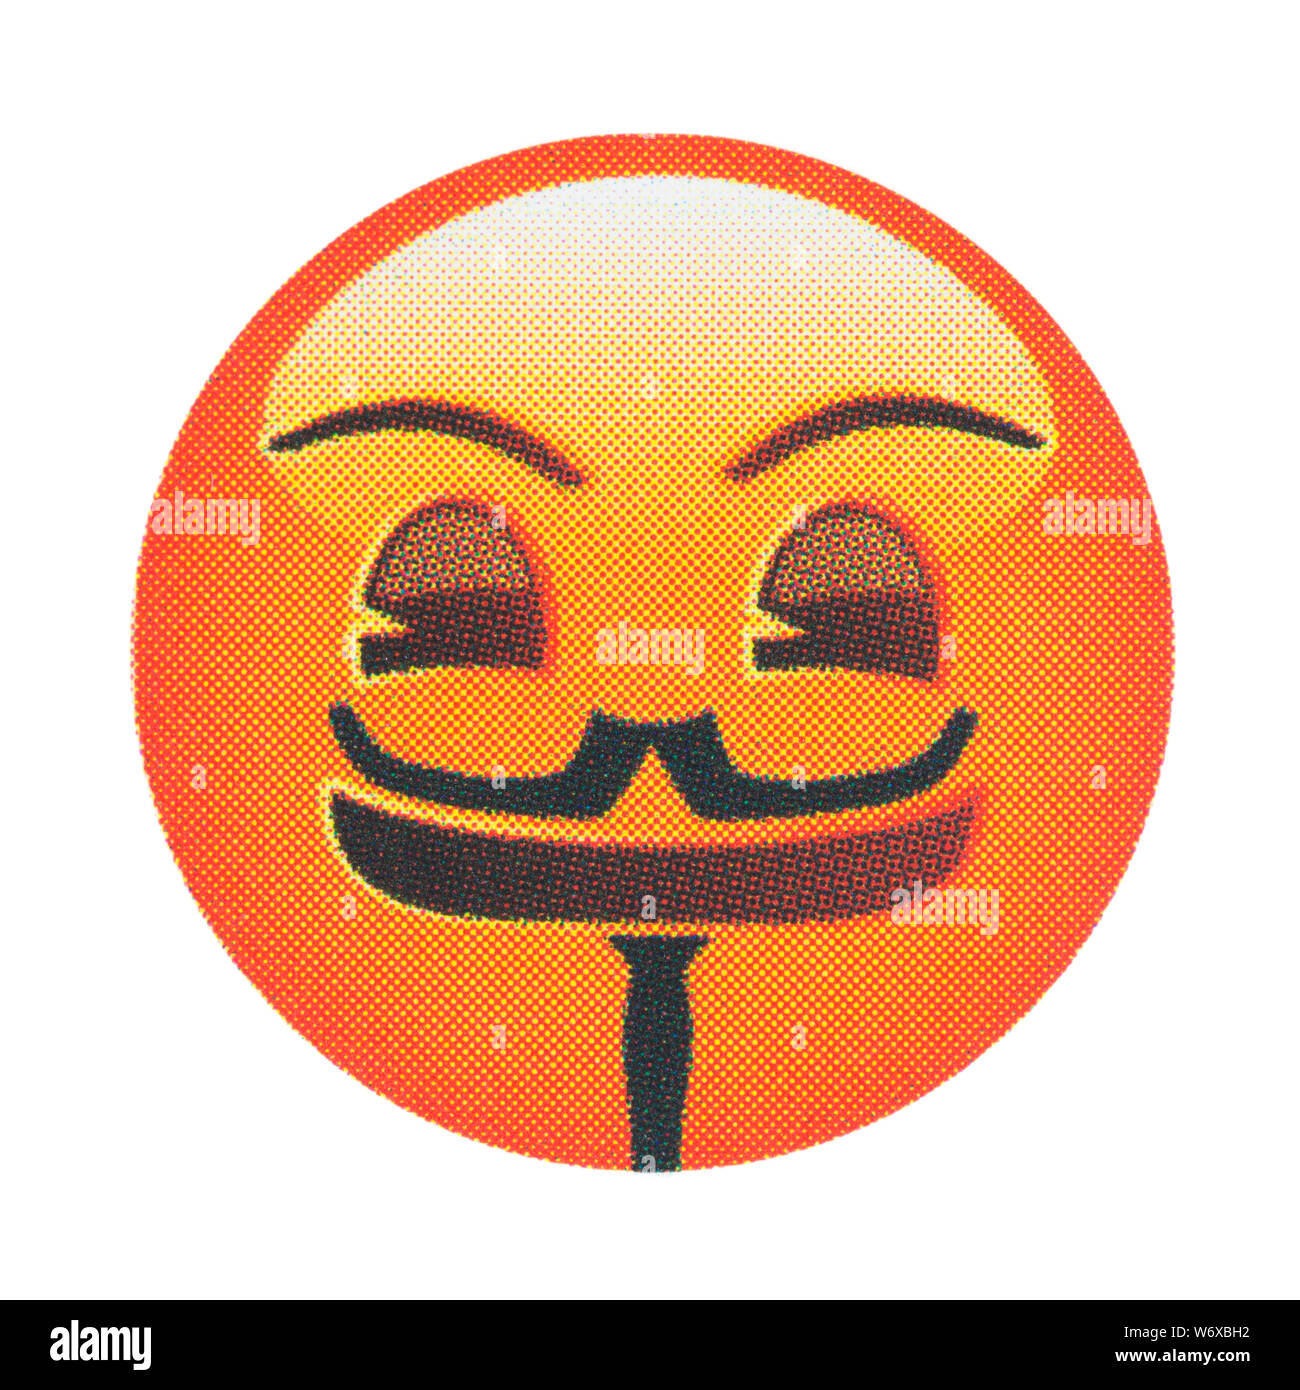 Anonyme vendetta Lächeln Emoticon Stockfoto